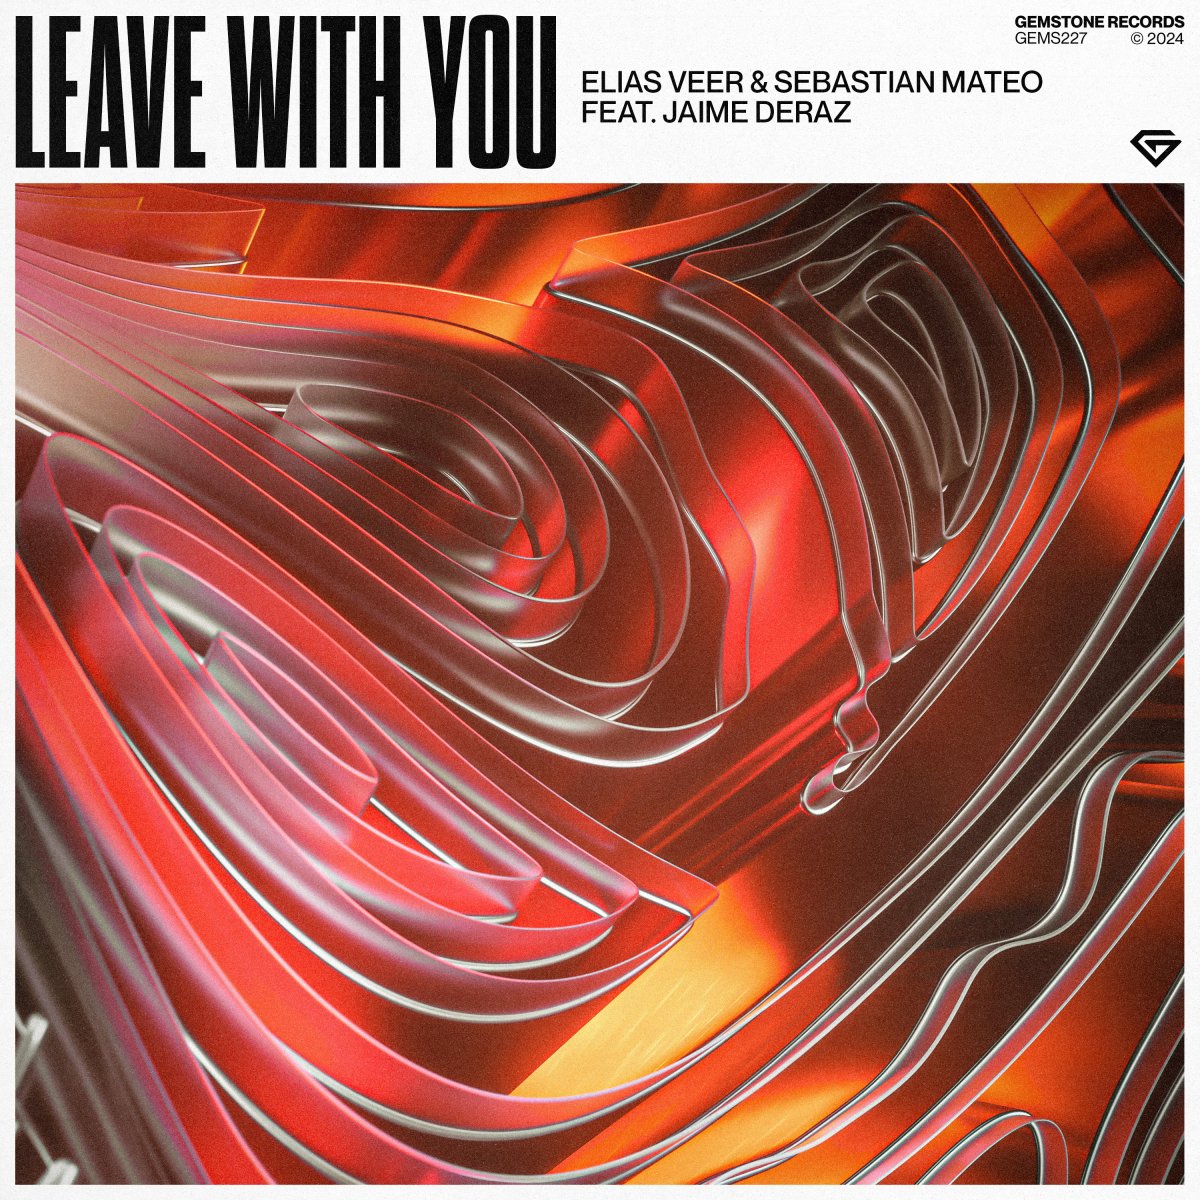 Leave With You - Elias Veer⁠ & Sebastian Mateo⁠ feat. Jaime Deraz⁠ 